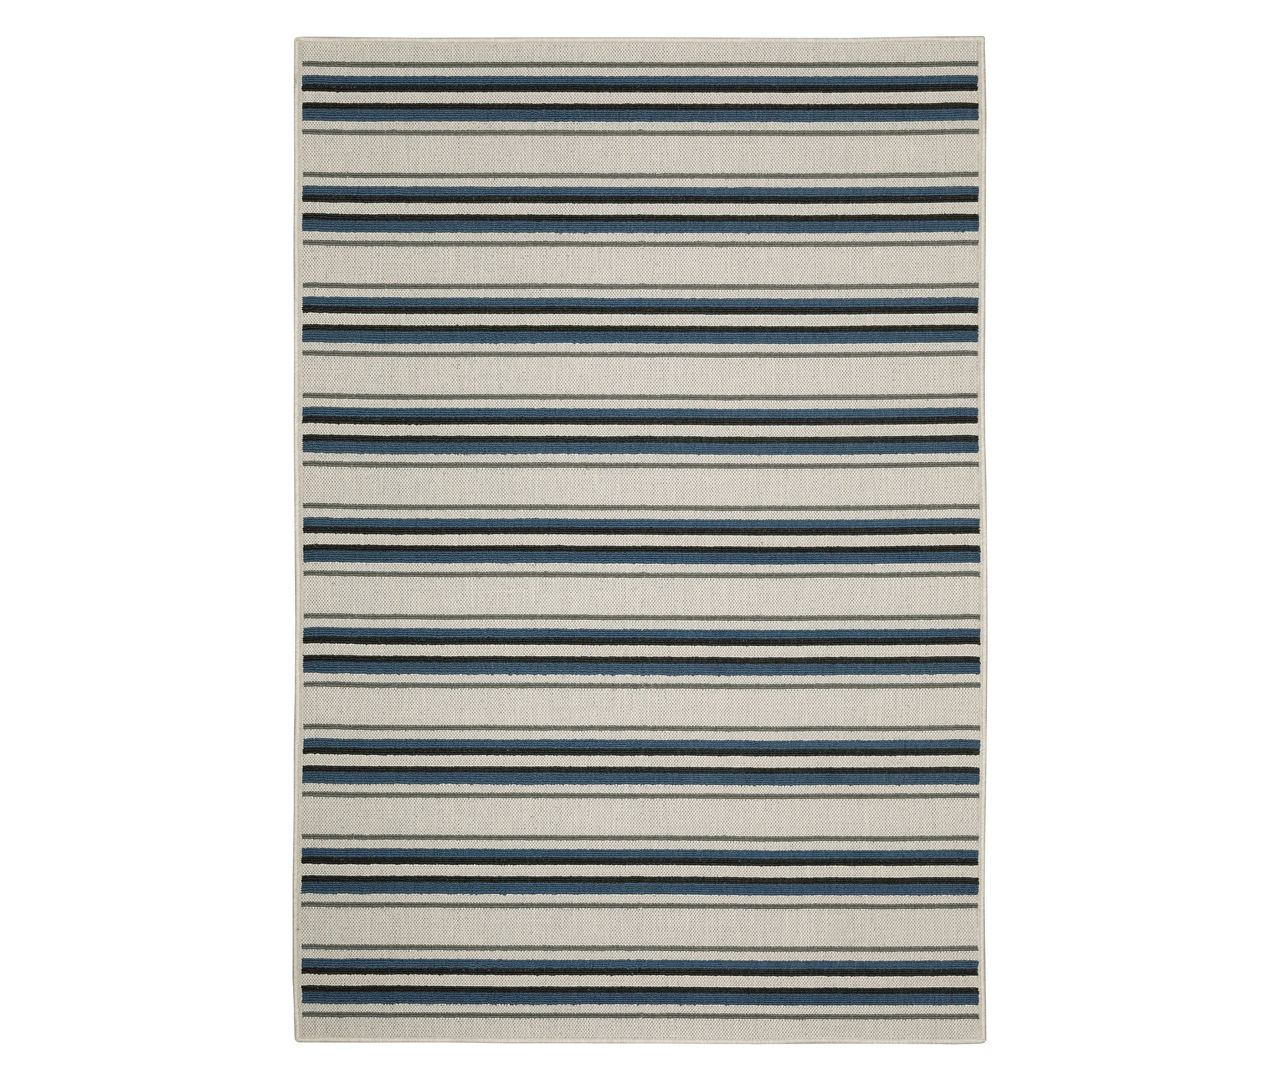 Torie Beige & Blue Stripe Outdoor Area Rug, (7.1' x 10')